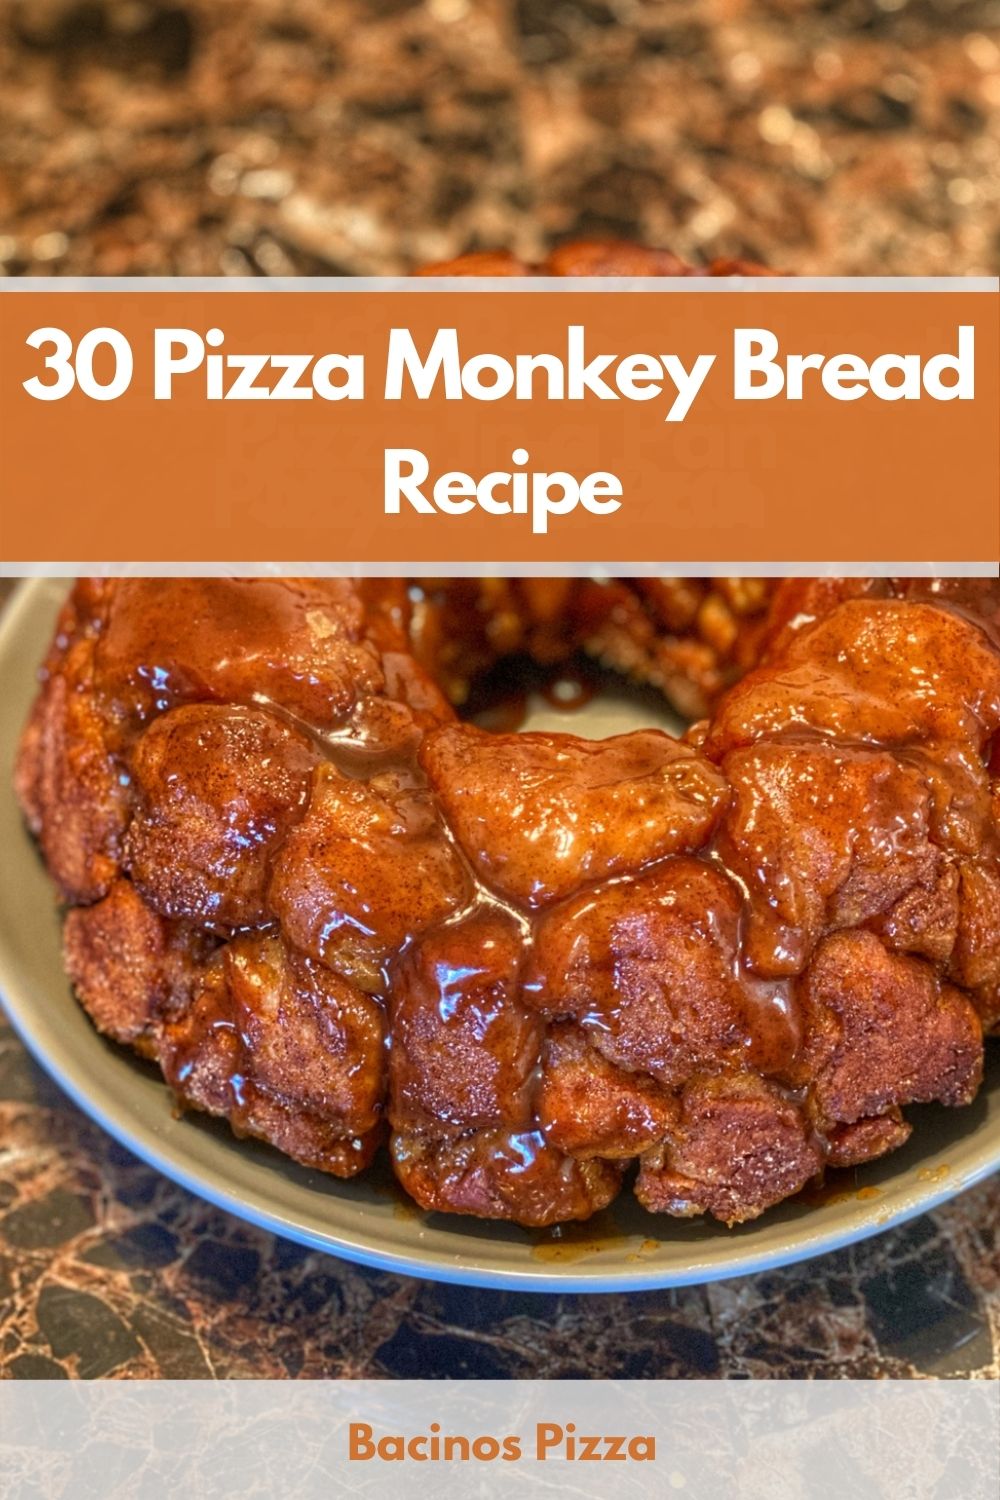 30 Pizza Monkey Bread Recipe pin